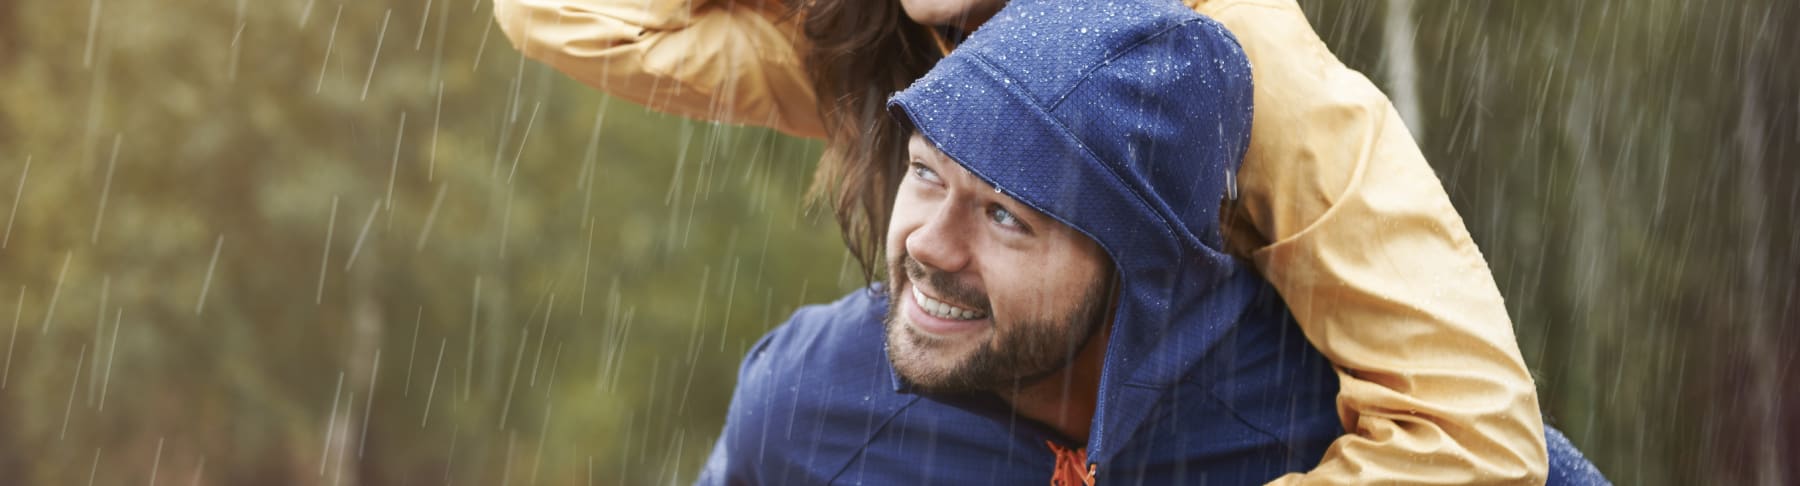 Man and woman enjoy the rain.